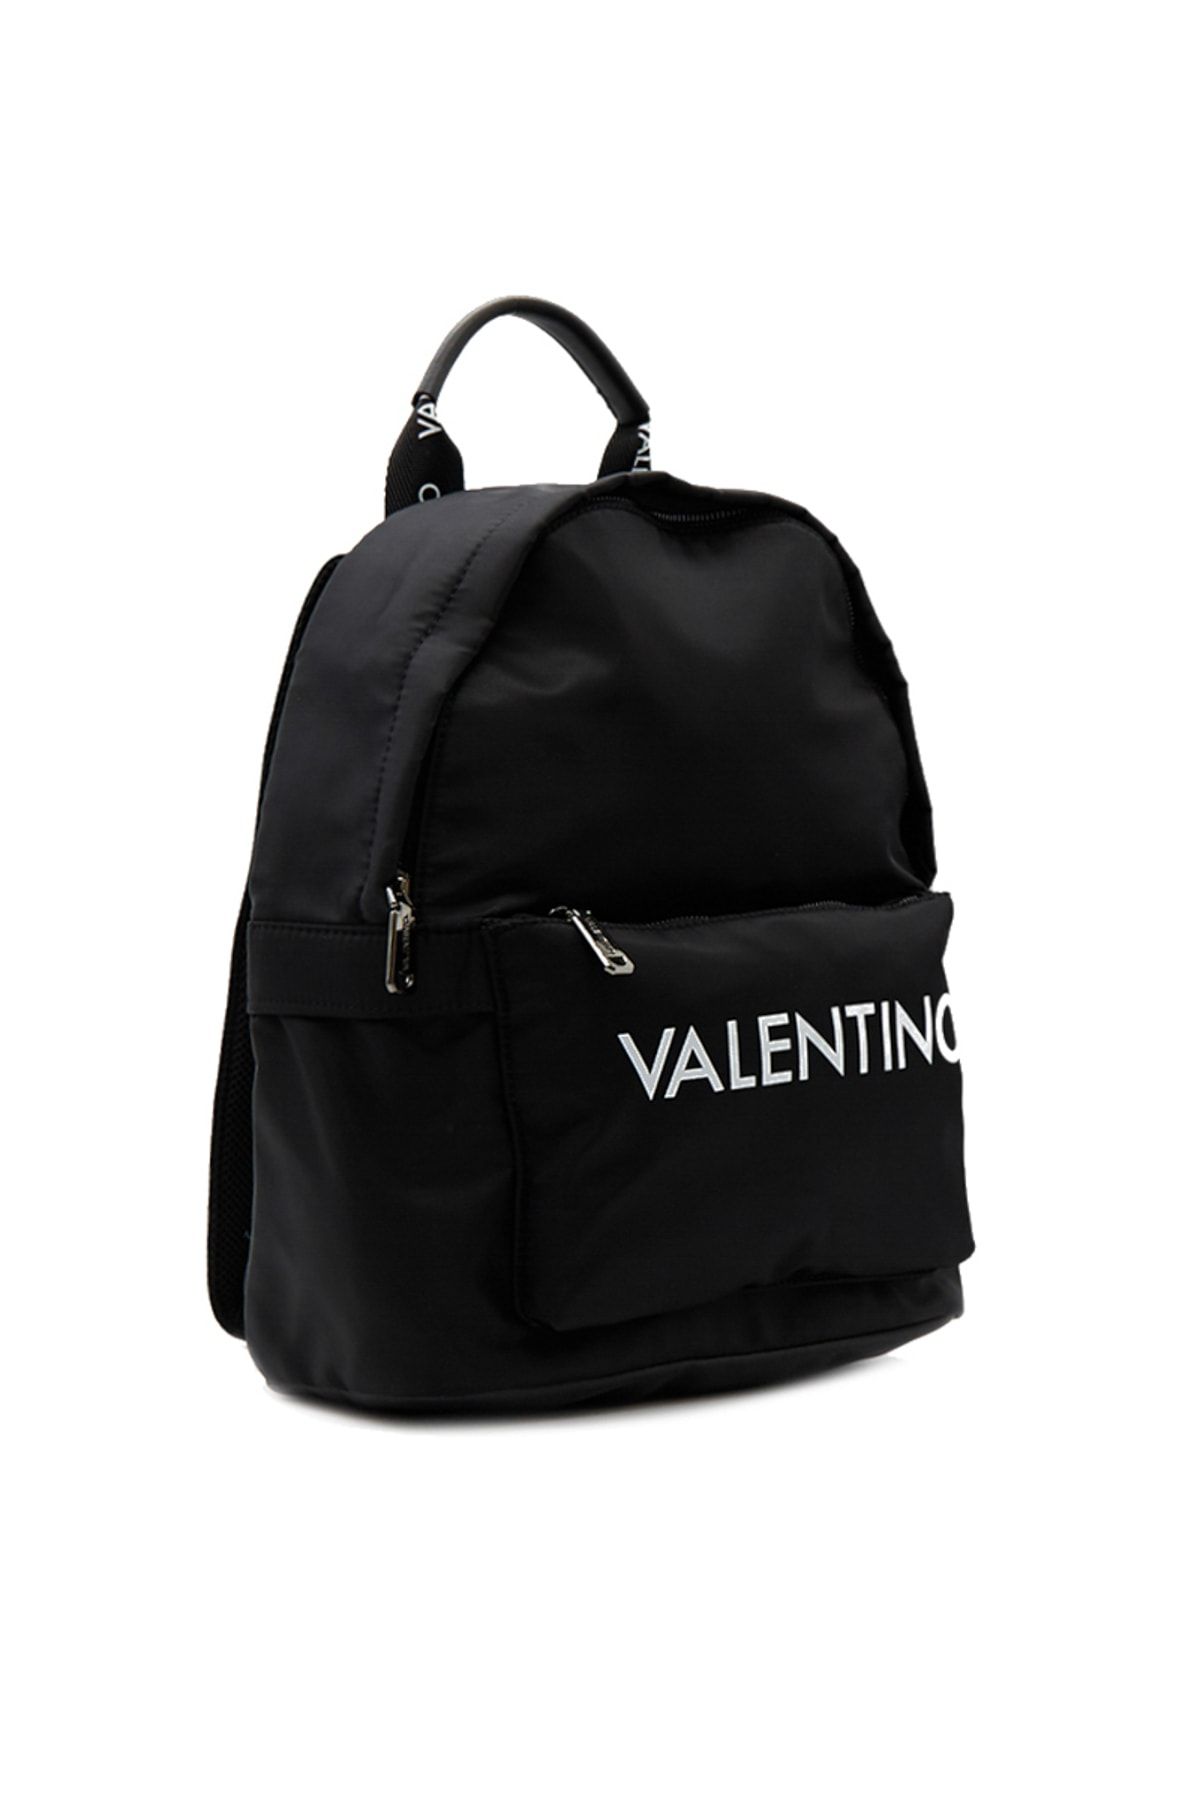 Mario Valentino Backpack - Black - Slogan